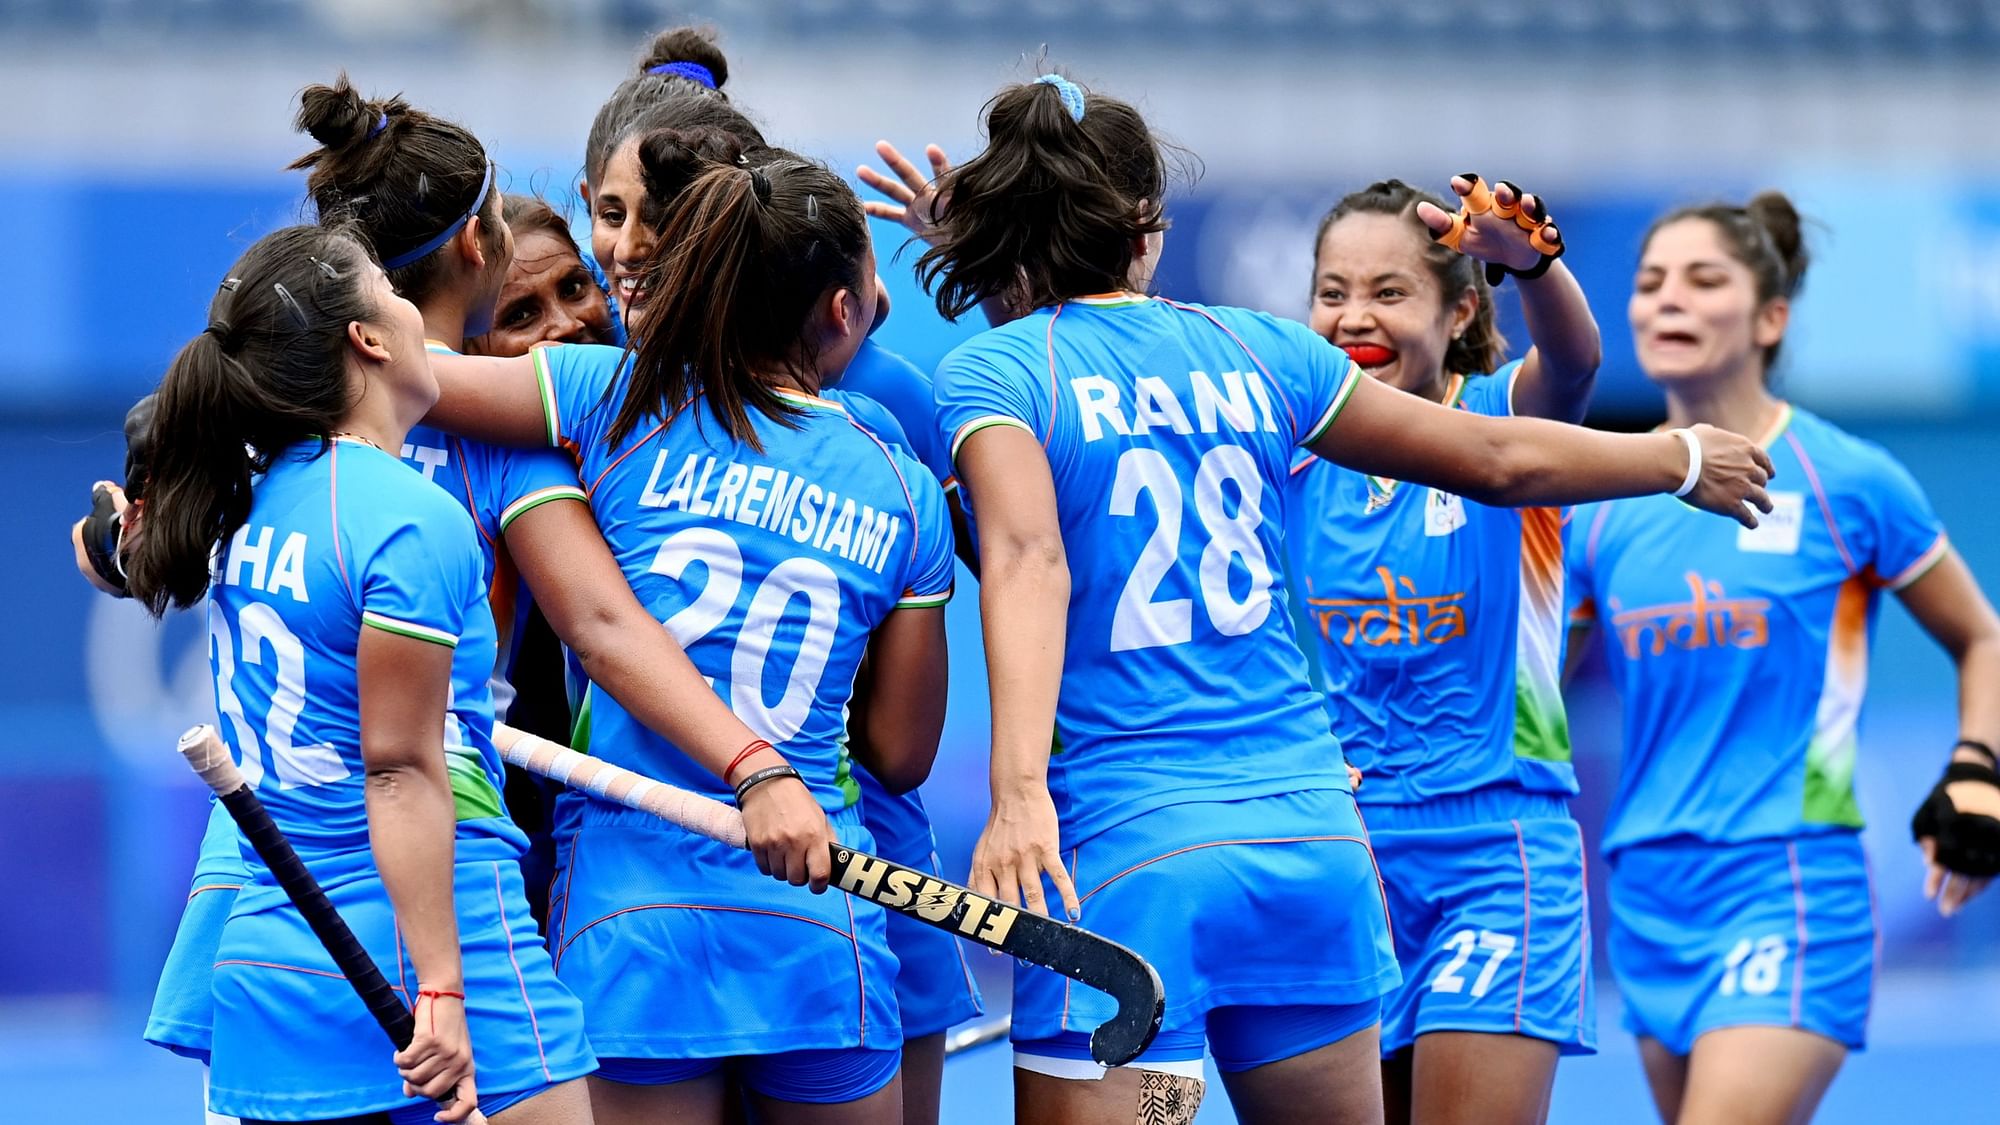 <div class="paragraphs"><p>Indian Women's team celebrating the victory.</p></div>